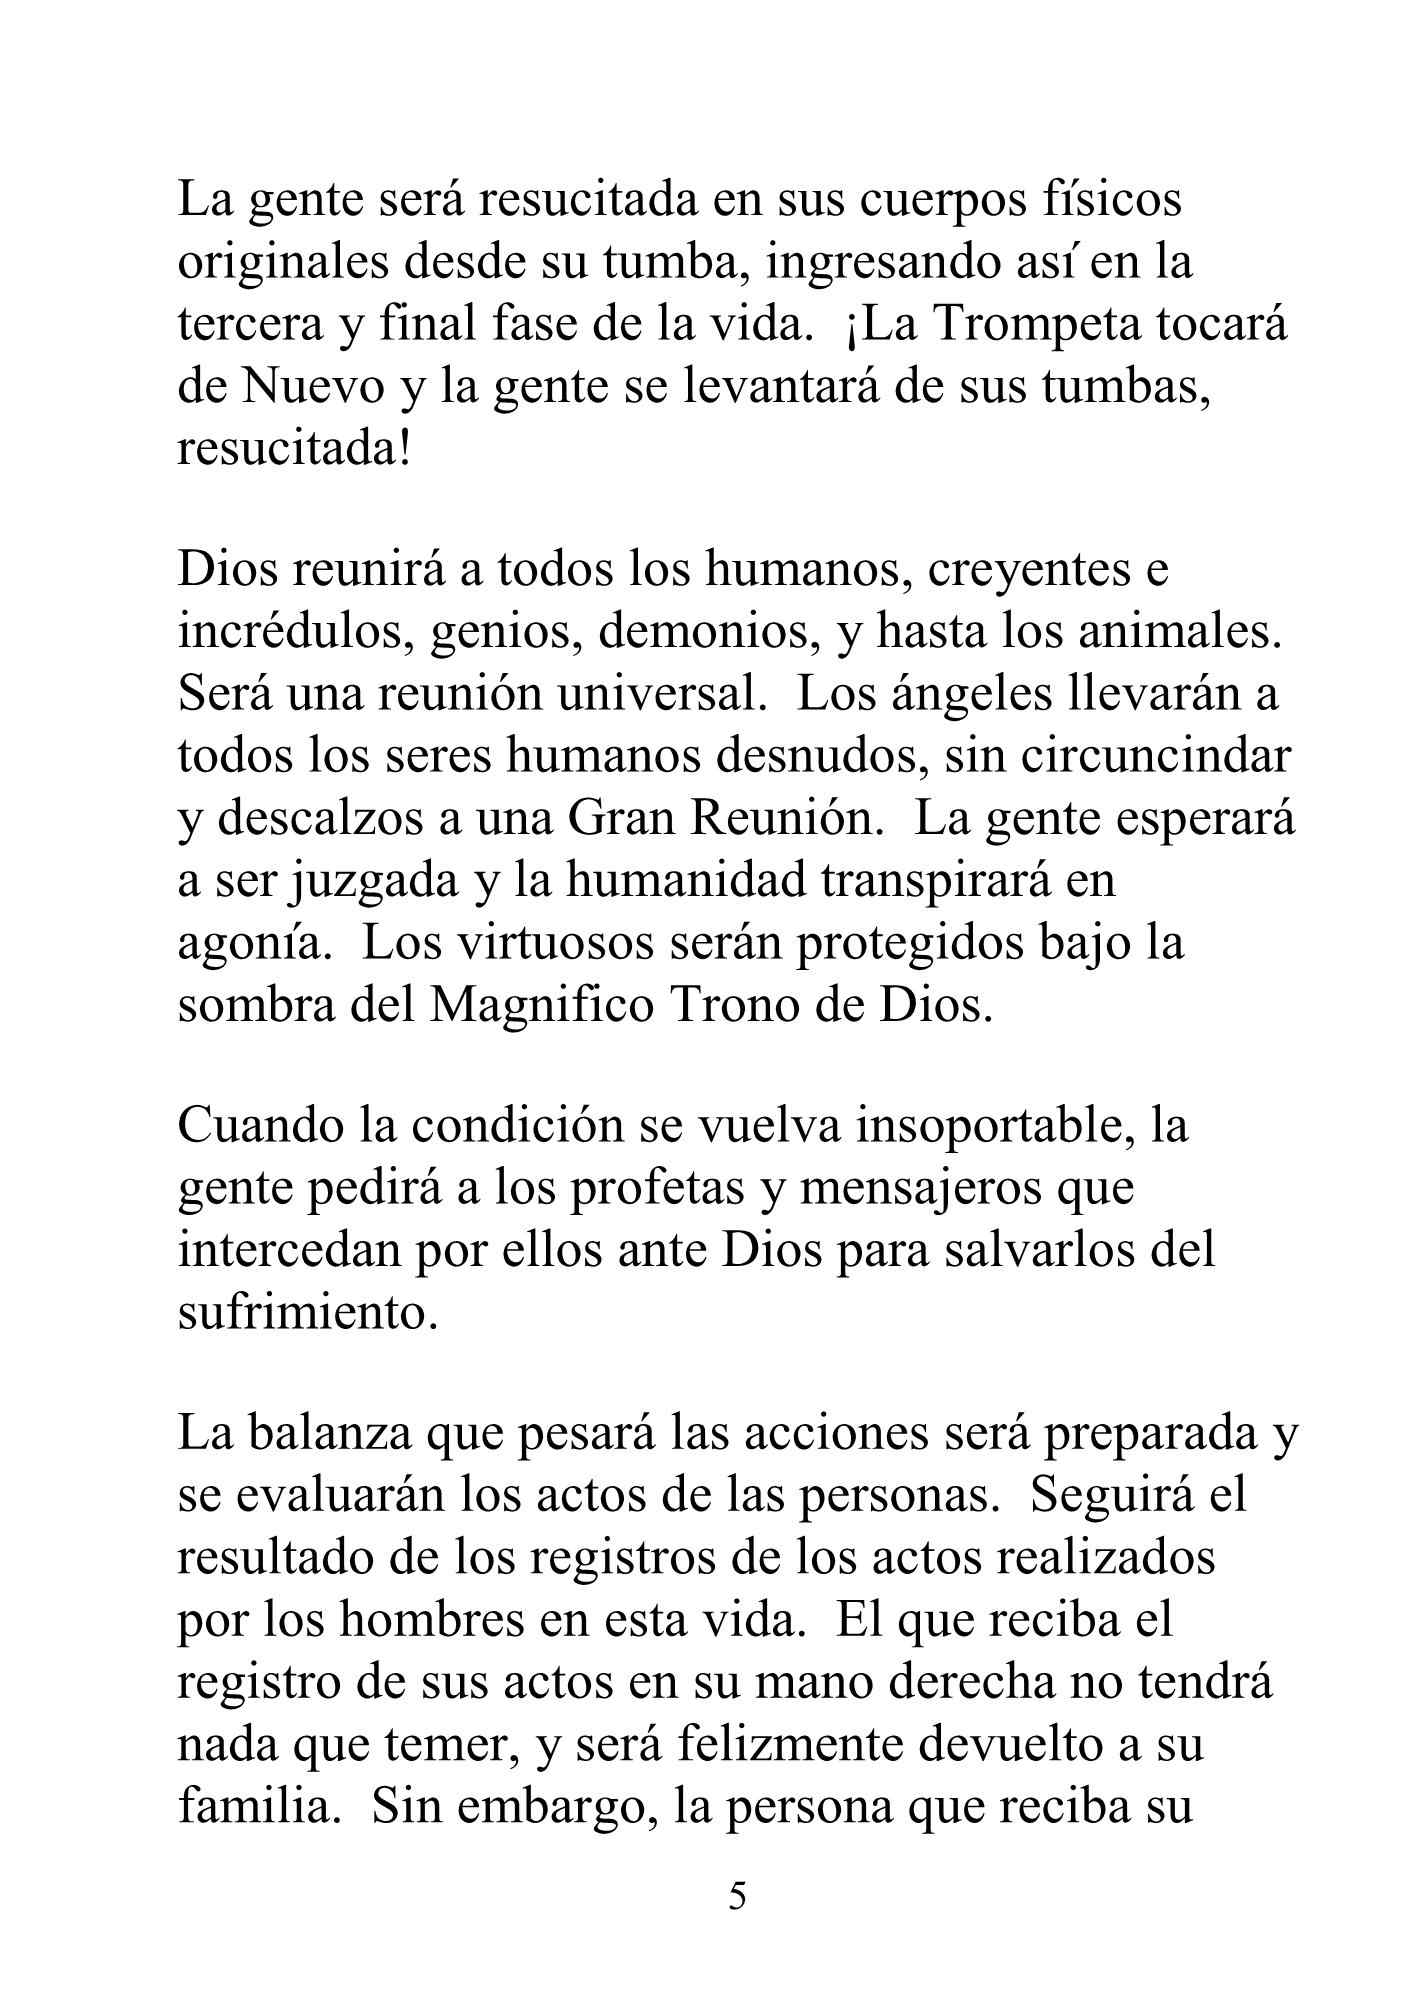 إسباني - الإيمان بالحياة بعد الموت - La Creencia en la Vida después de la Muerte.pdf, 8-Sayfa 